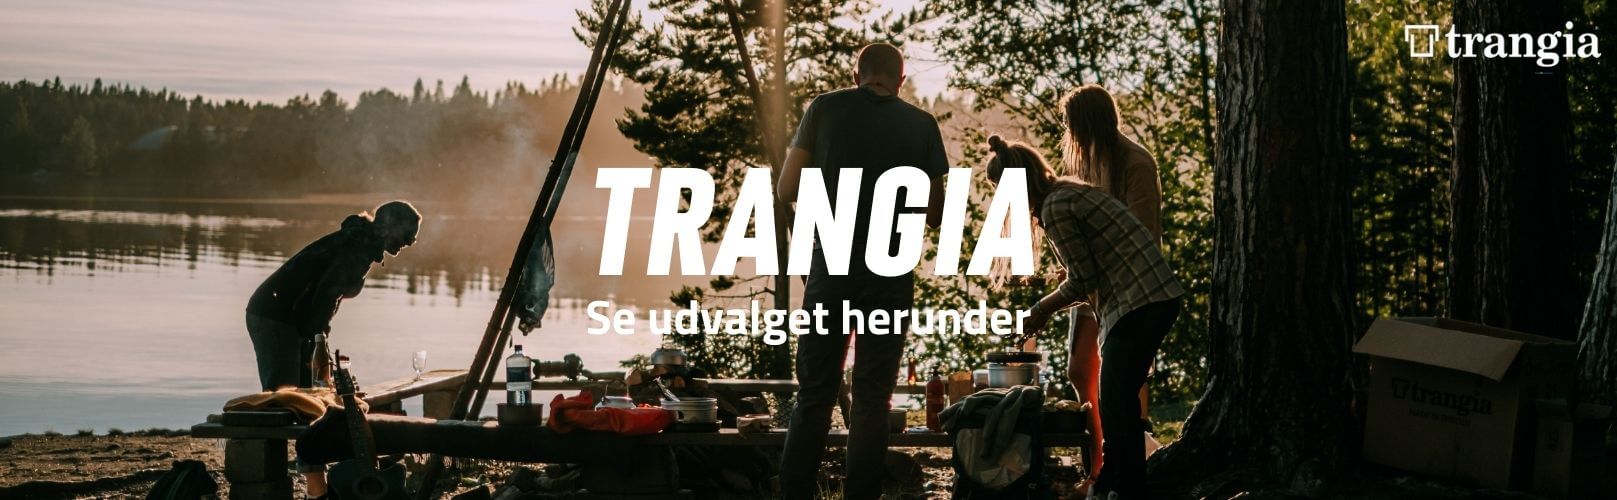 Trangia brand banner